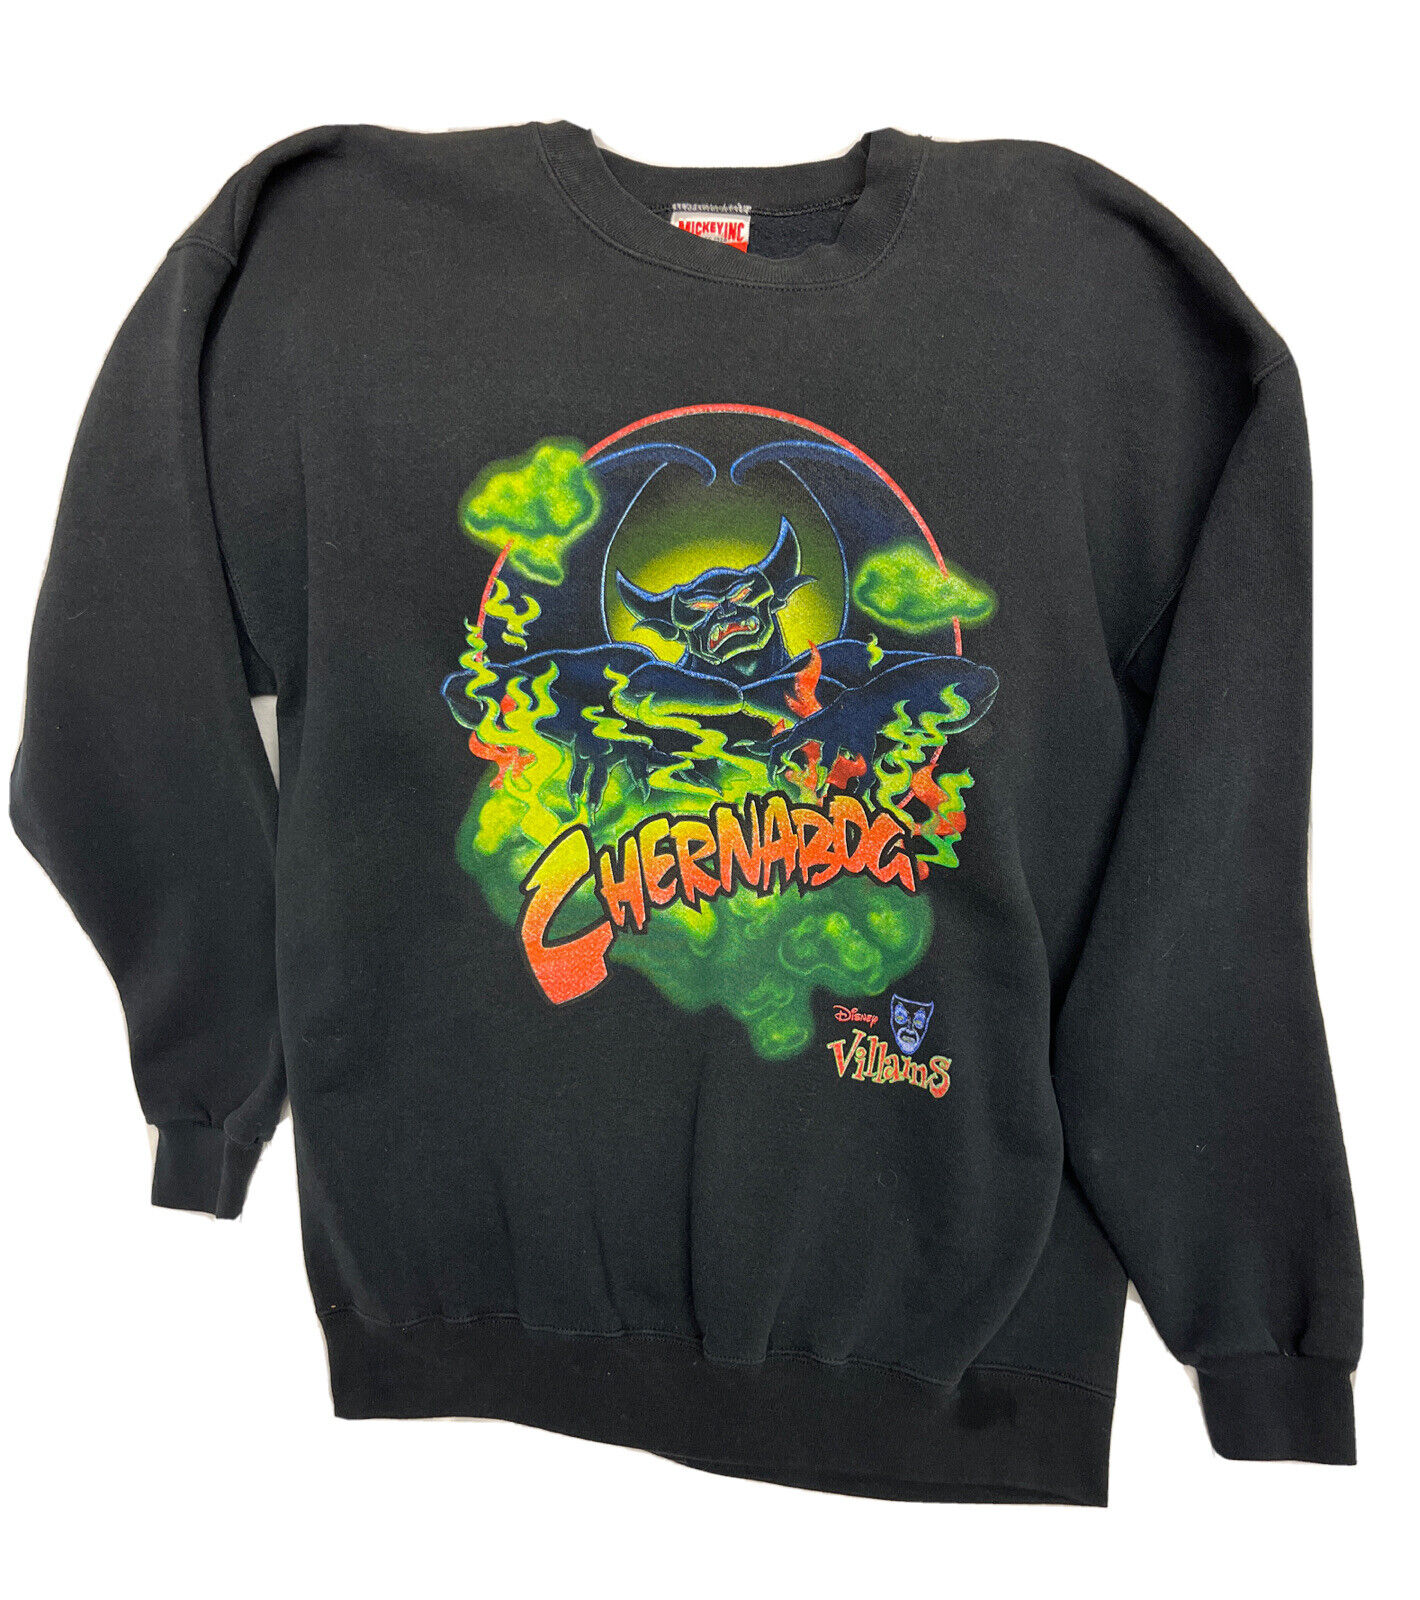 Vintage Rare Chernabog Disney Villains Sweatshirt Shirt Size XL Mickey, Inc.